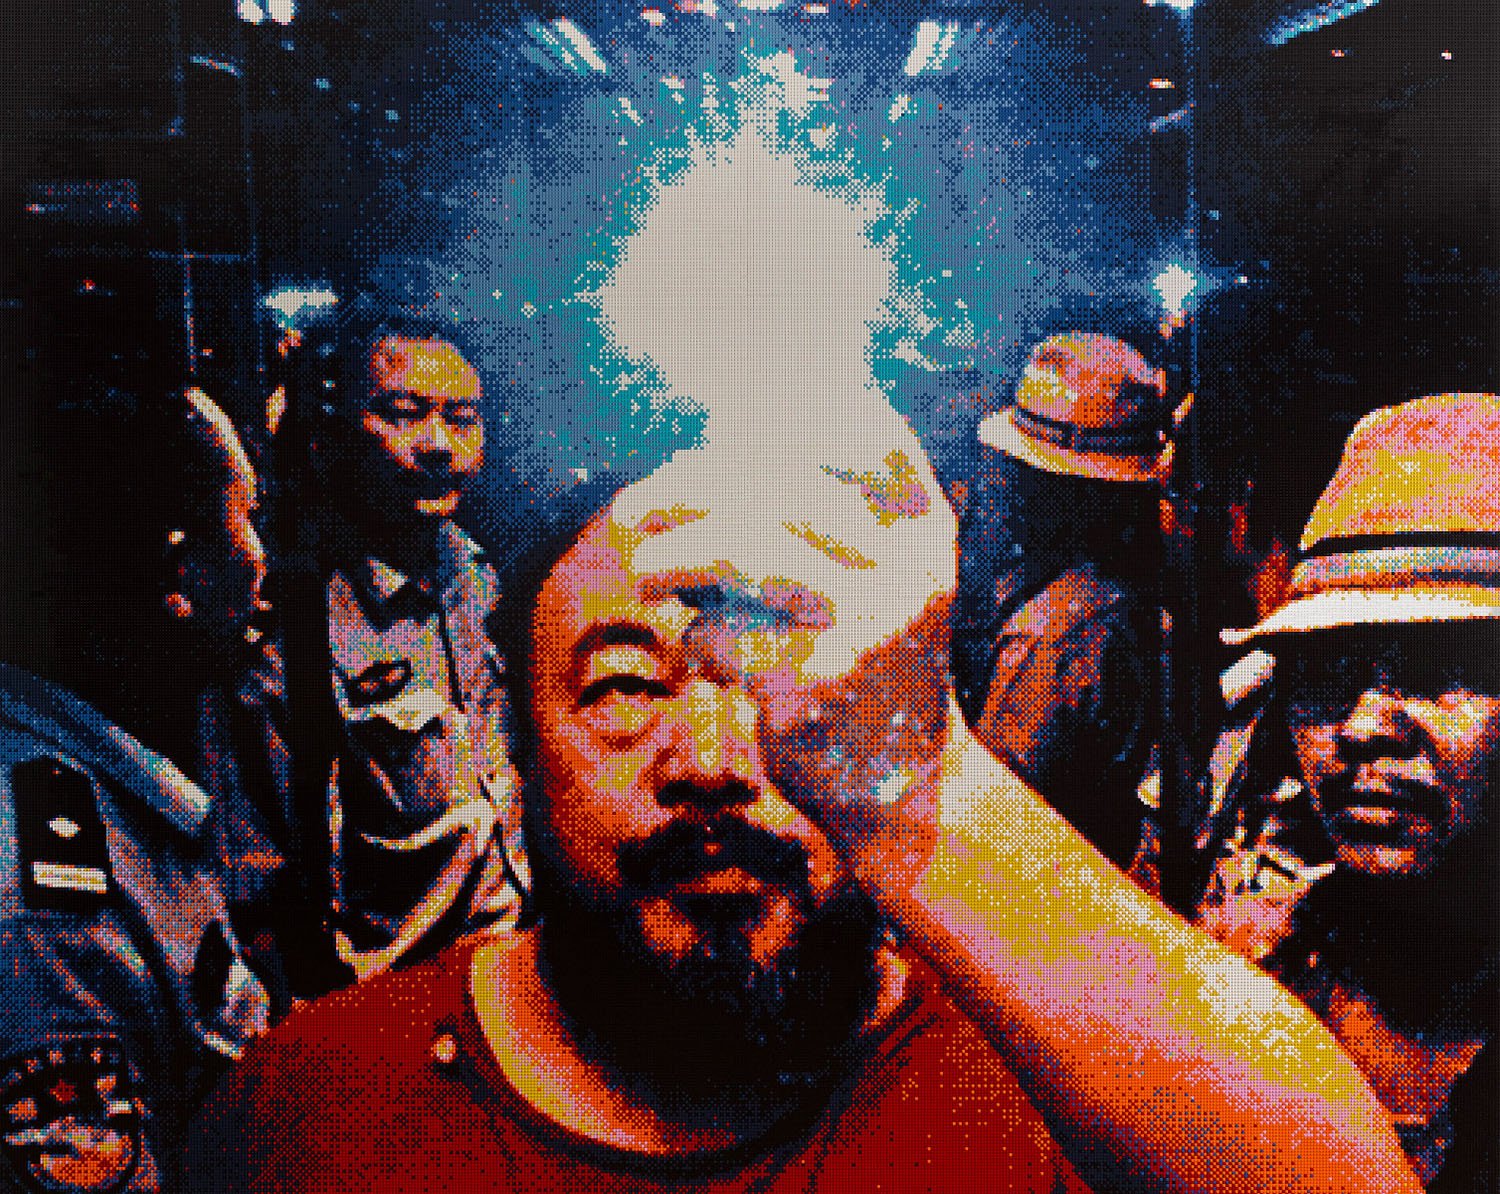 13_Ai Weiwei_Illumination_2019_c Ai Weiwei Studio_LR.jpg